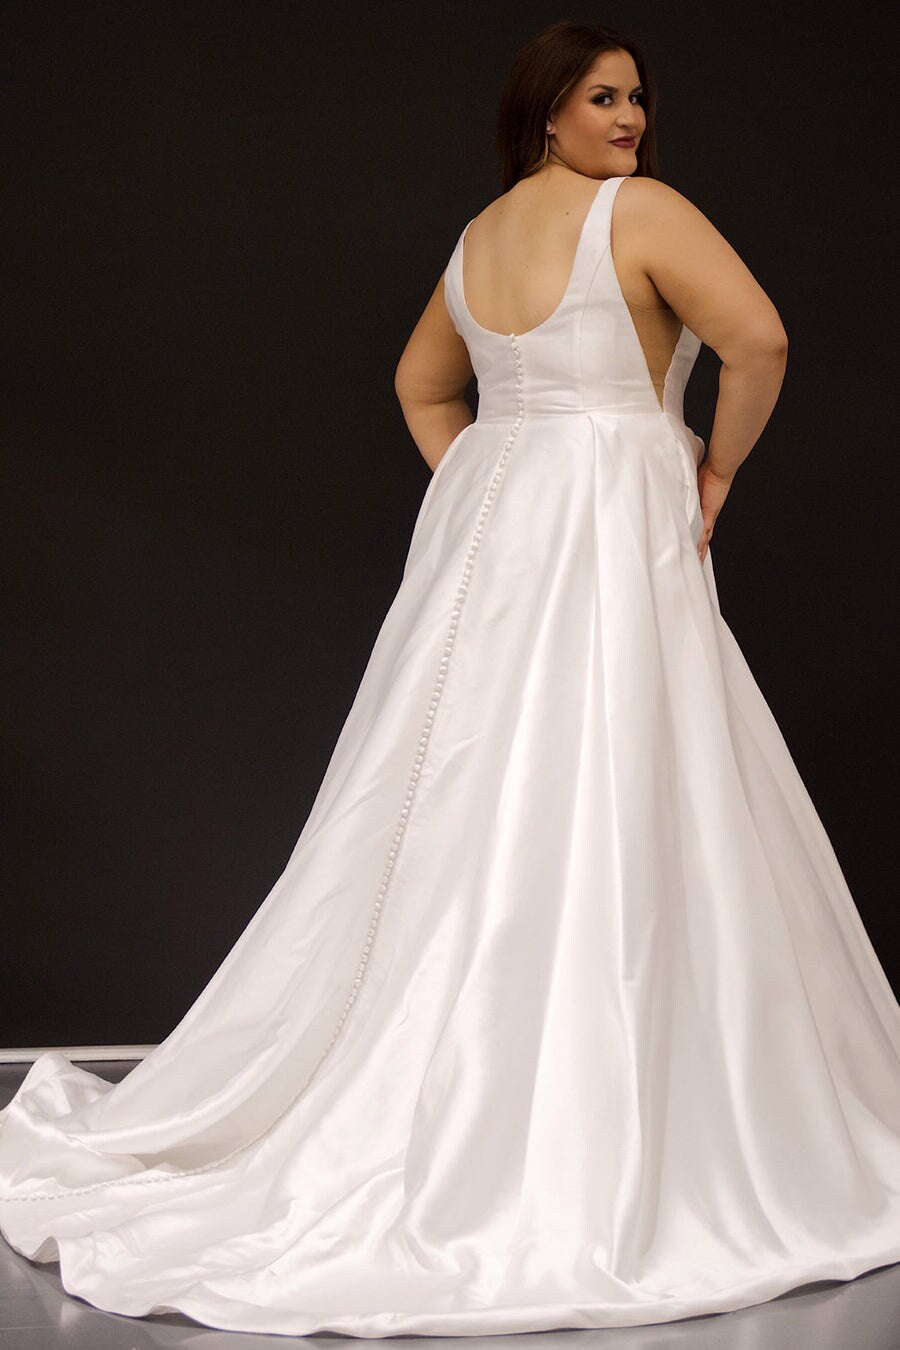 Aline Plus Size Wedding Dress Bridal Gown Square Neckline Side Slit Skirt Bridal Ivory Satin Bra Friendly Straps Pockets